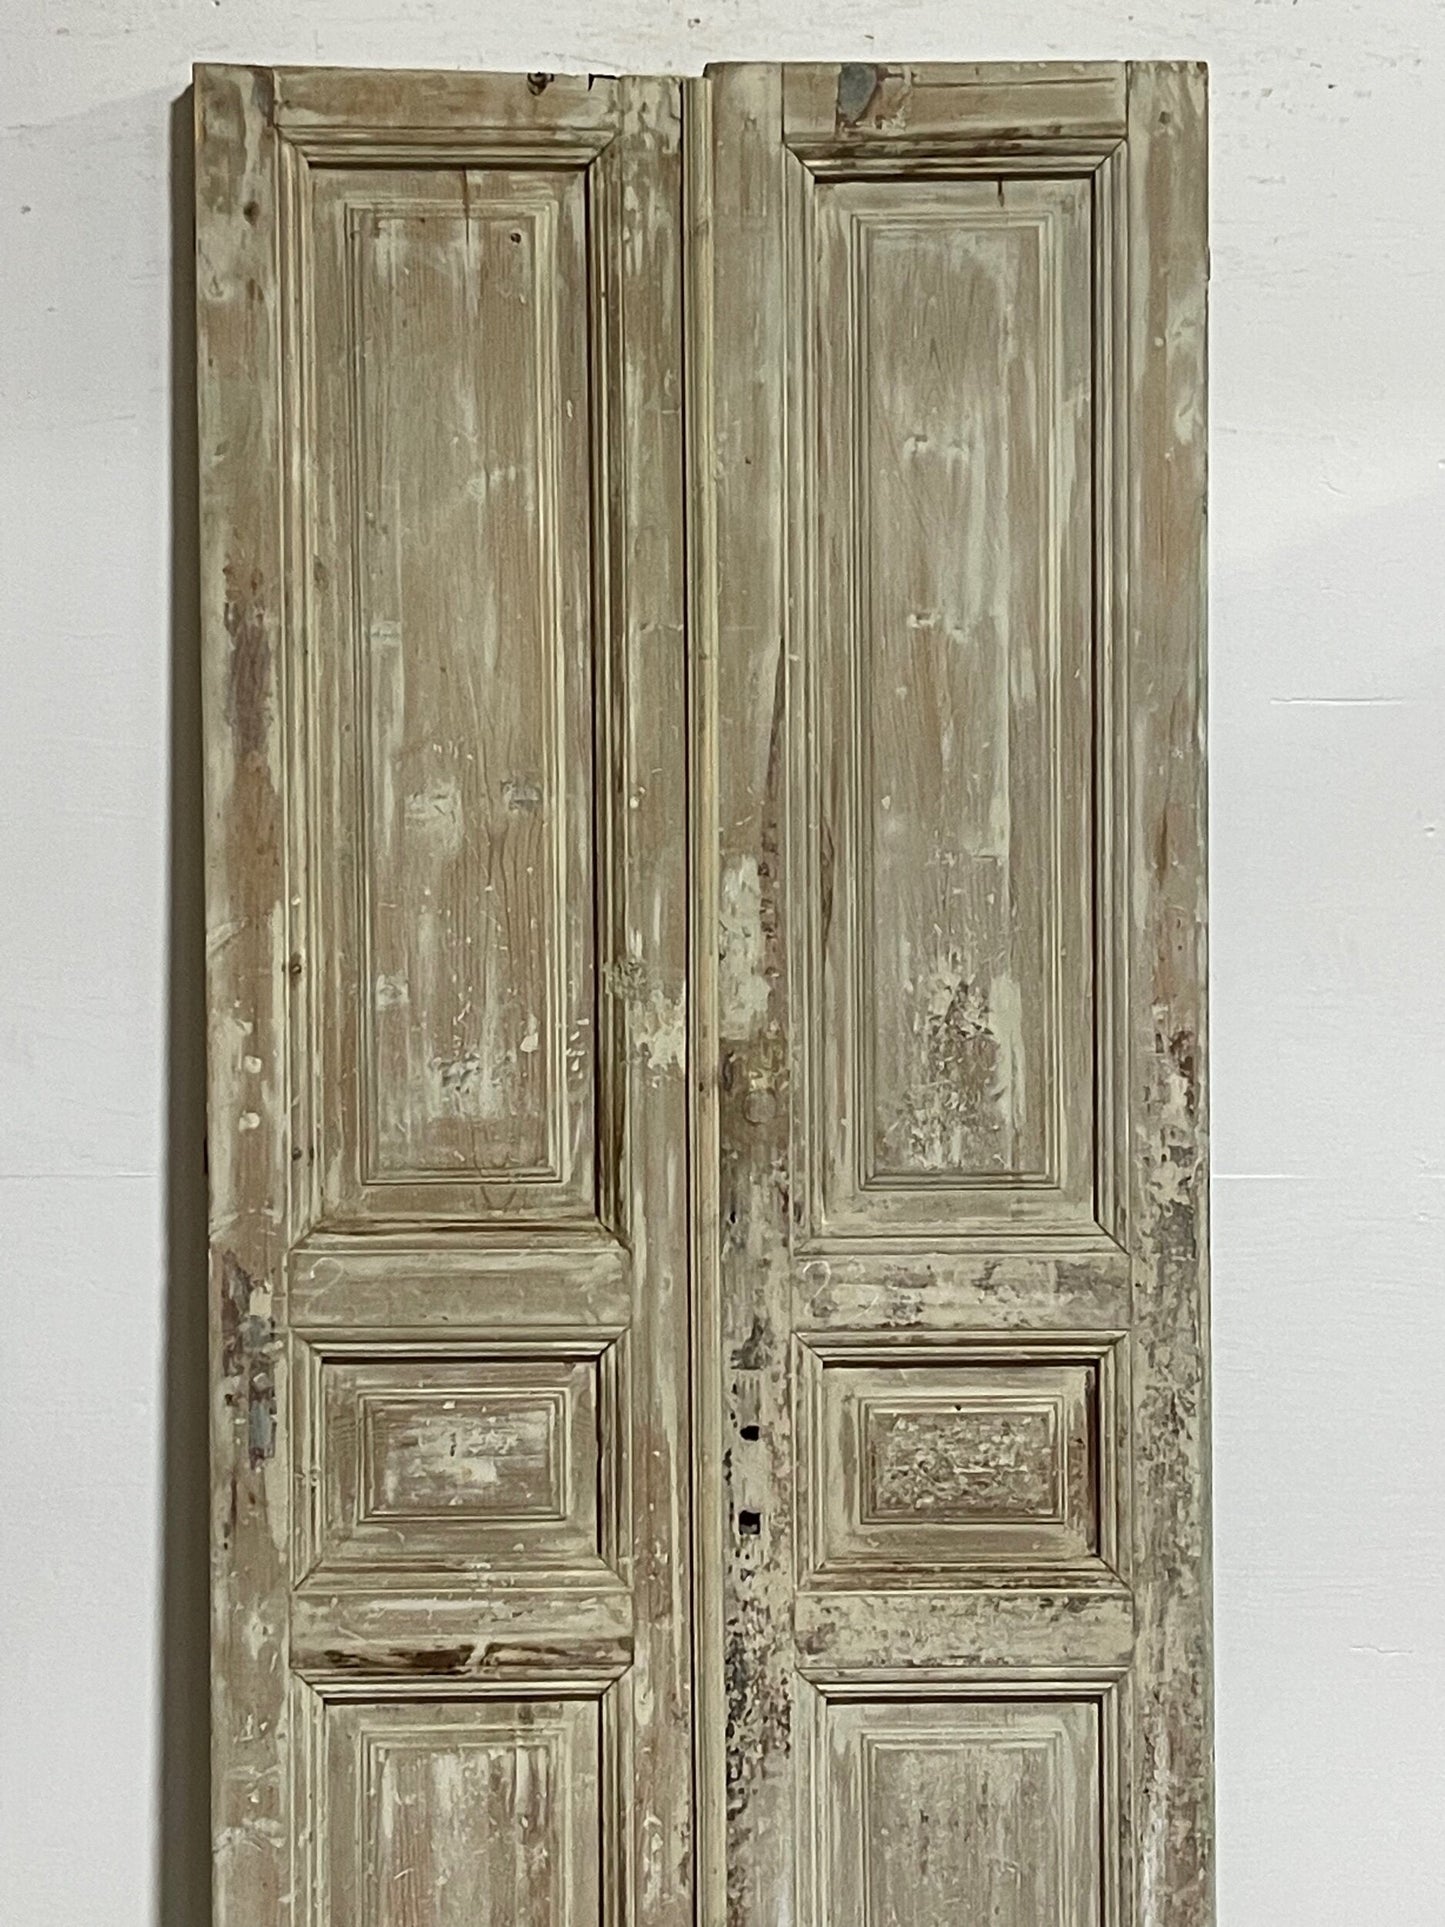 Antique French doors (92x39.25) H0197s